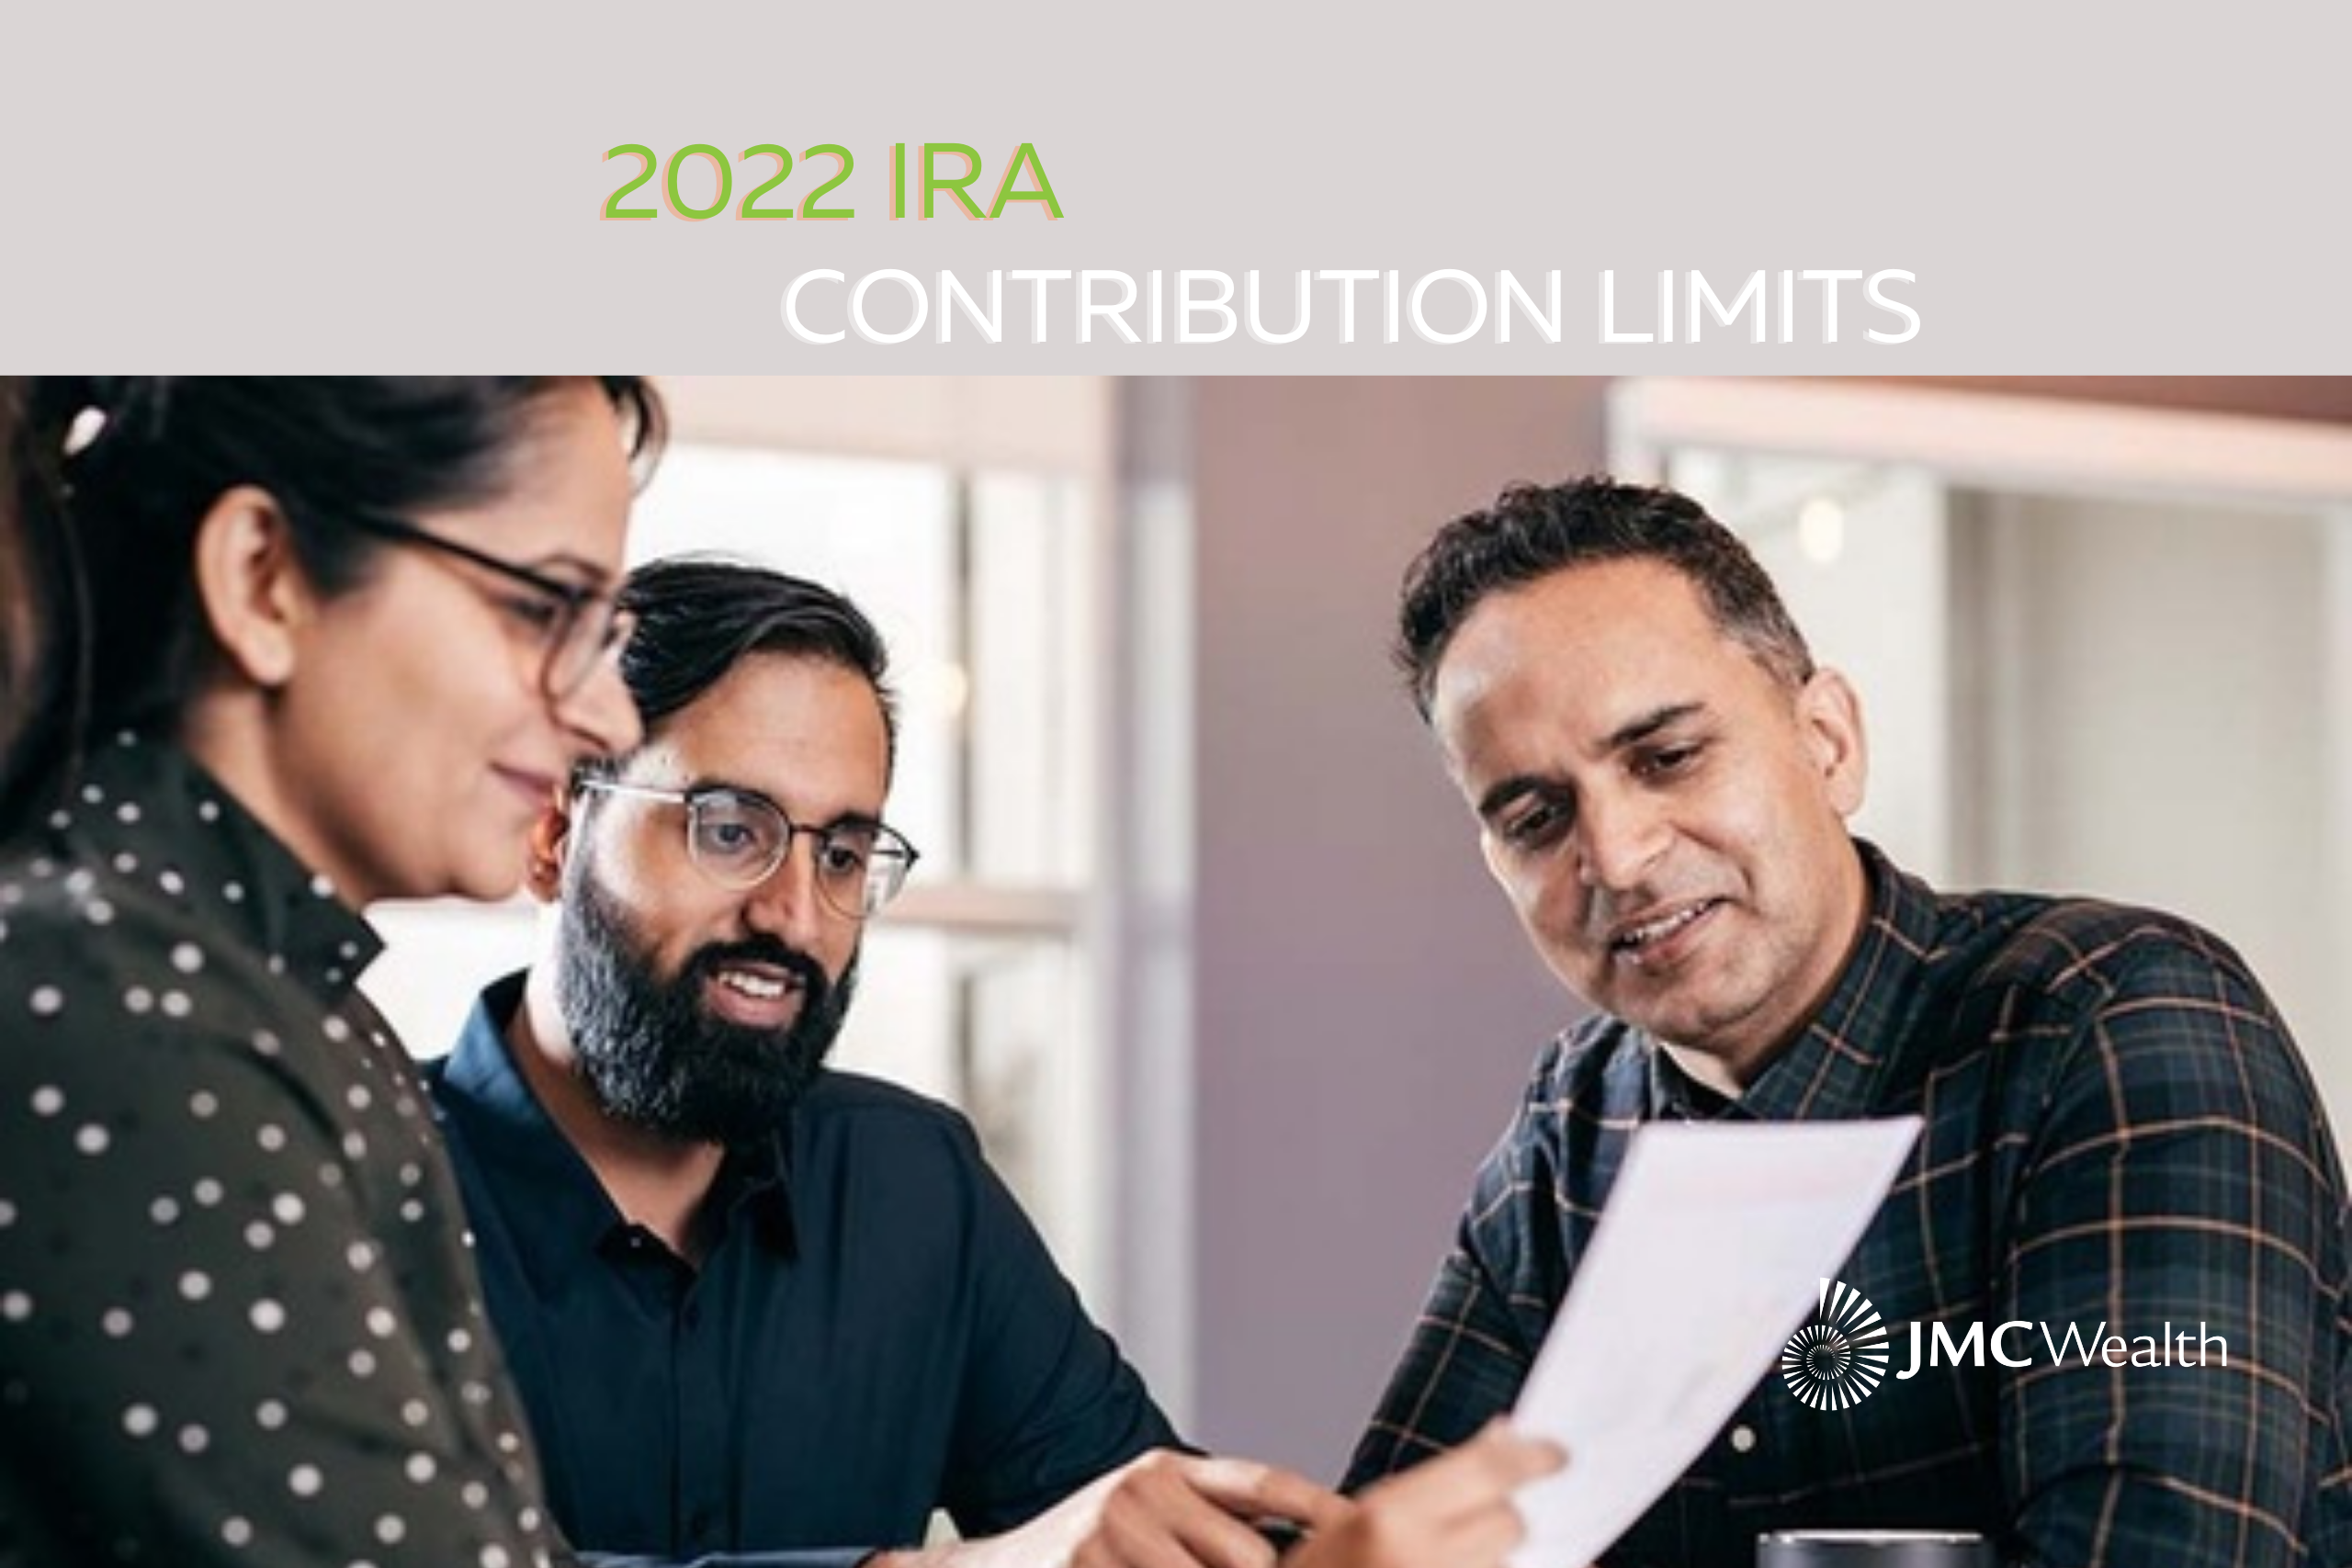 2022 IRA Contribution limits